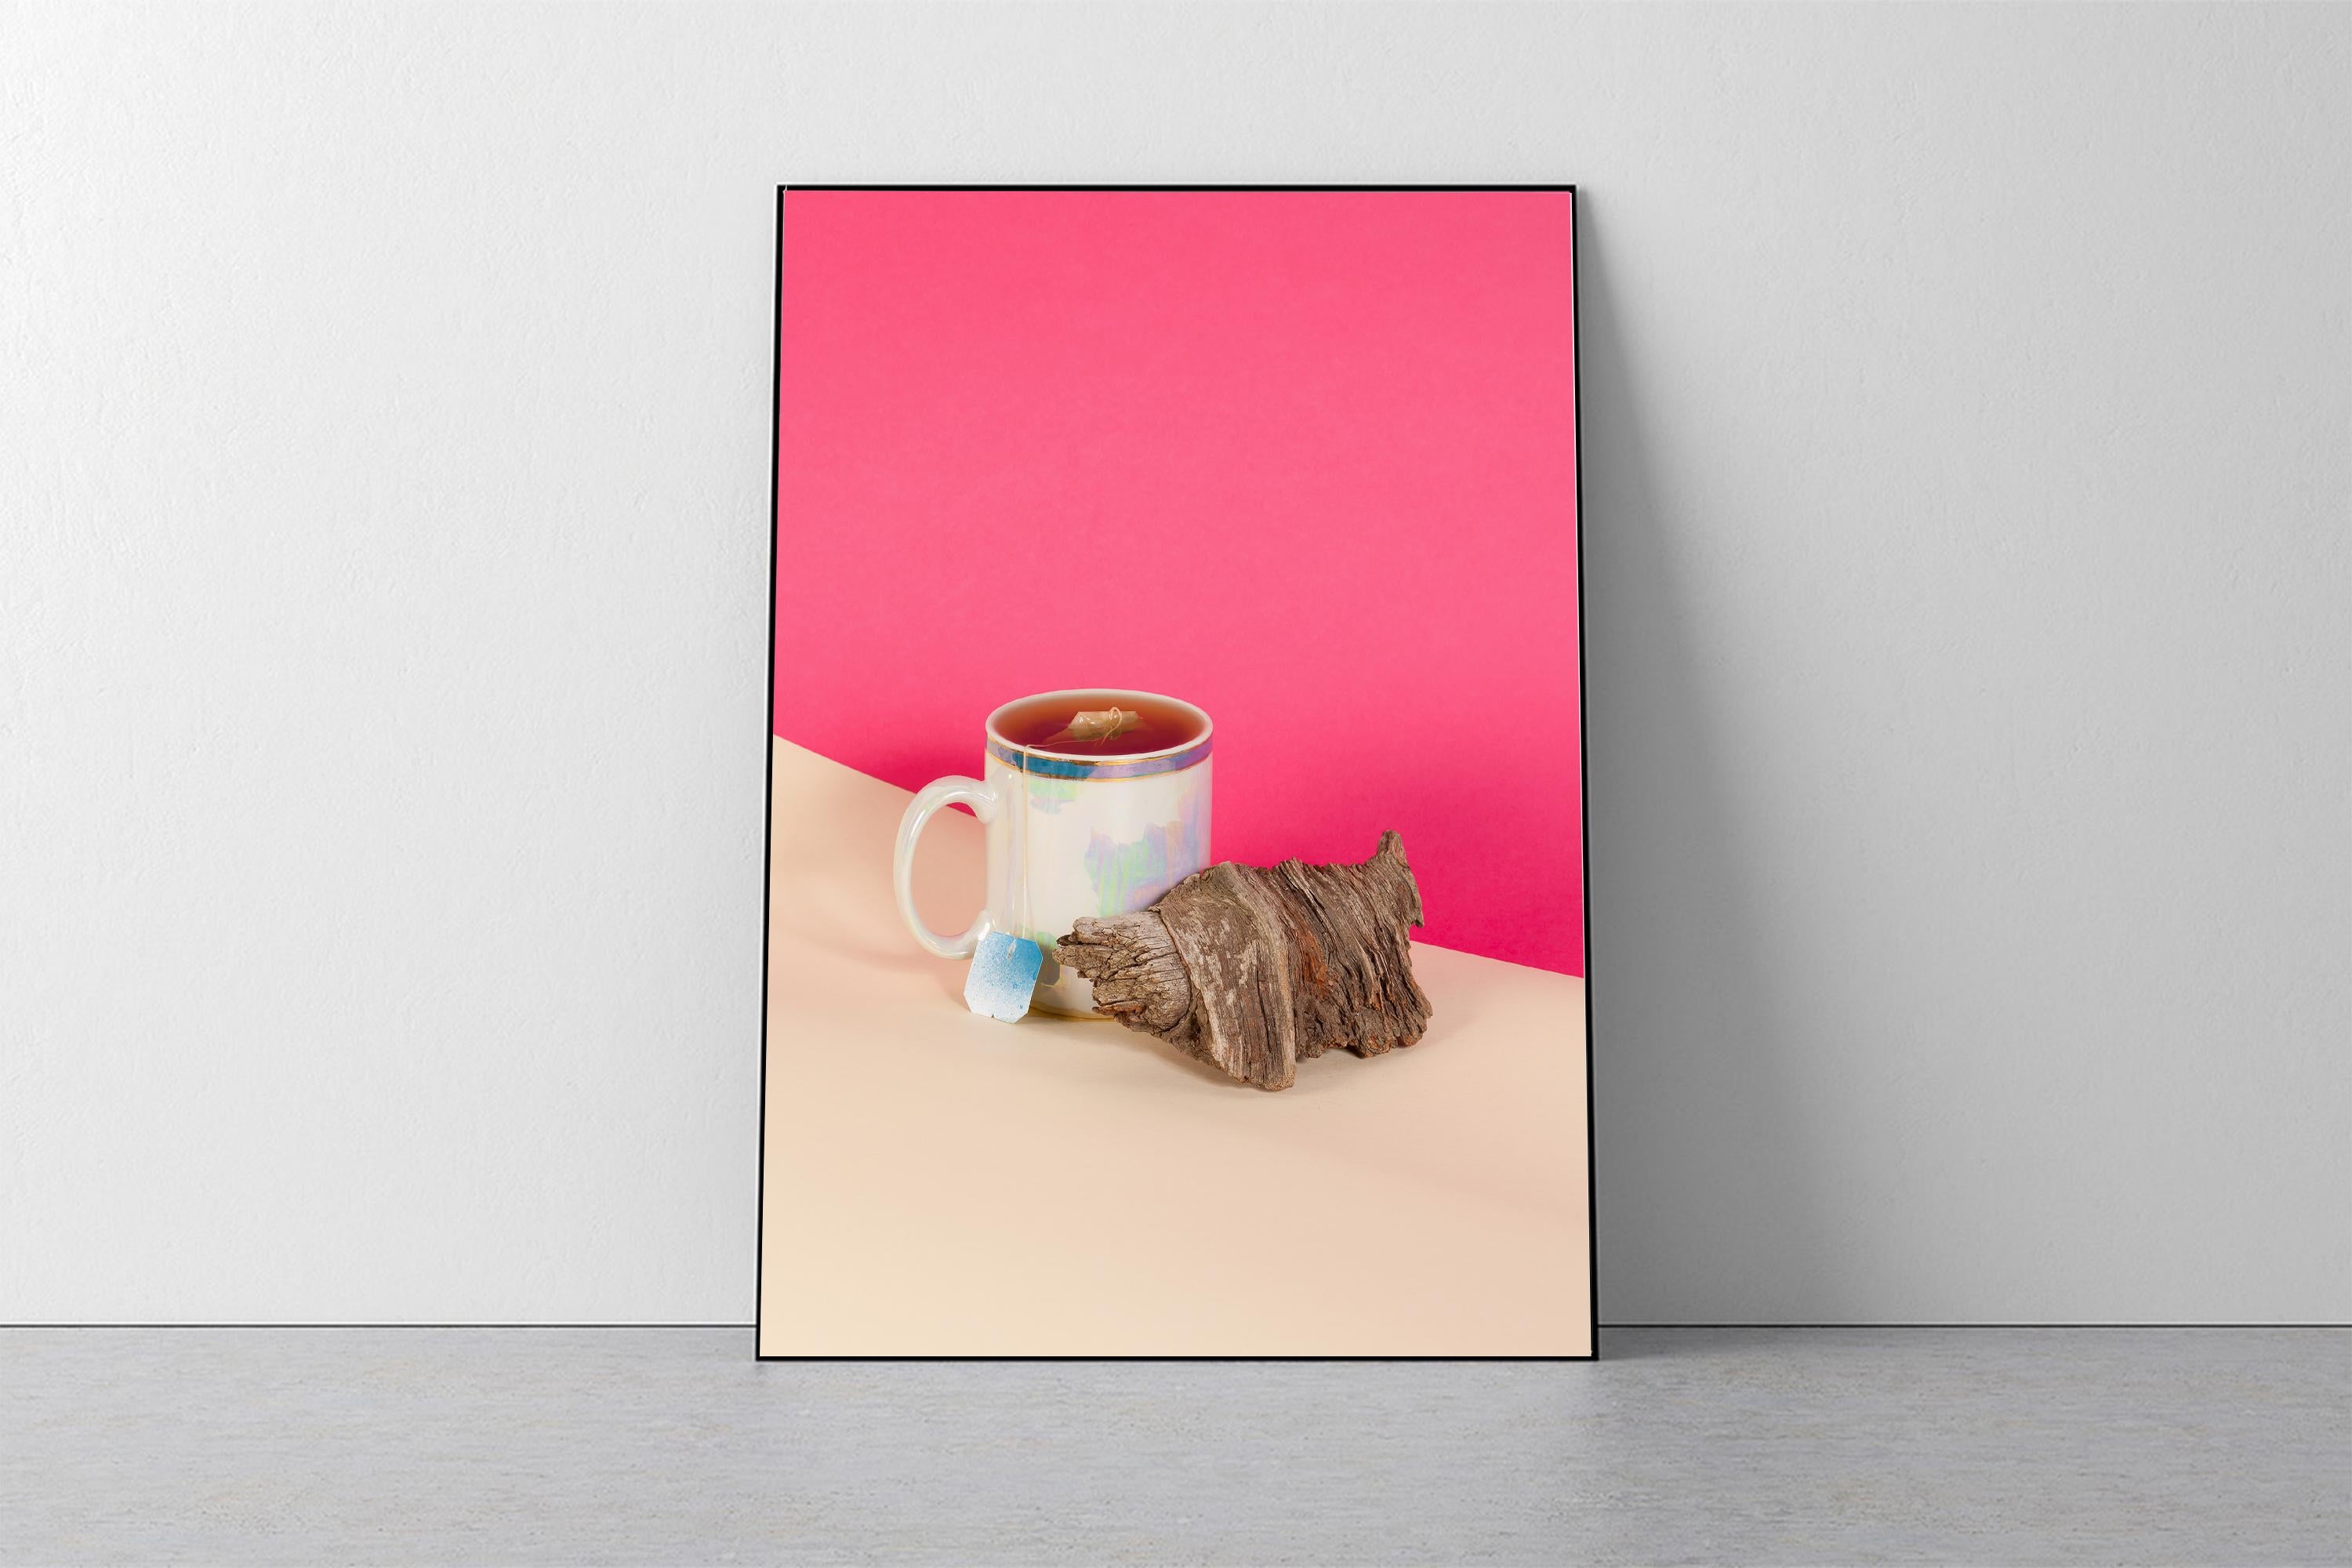 Pink Background Still Life Scene, Cup of Tea, Wood Croissant, Retro, Giclée  - Art Deco Photograph by Ryan Rivadeneyra